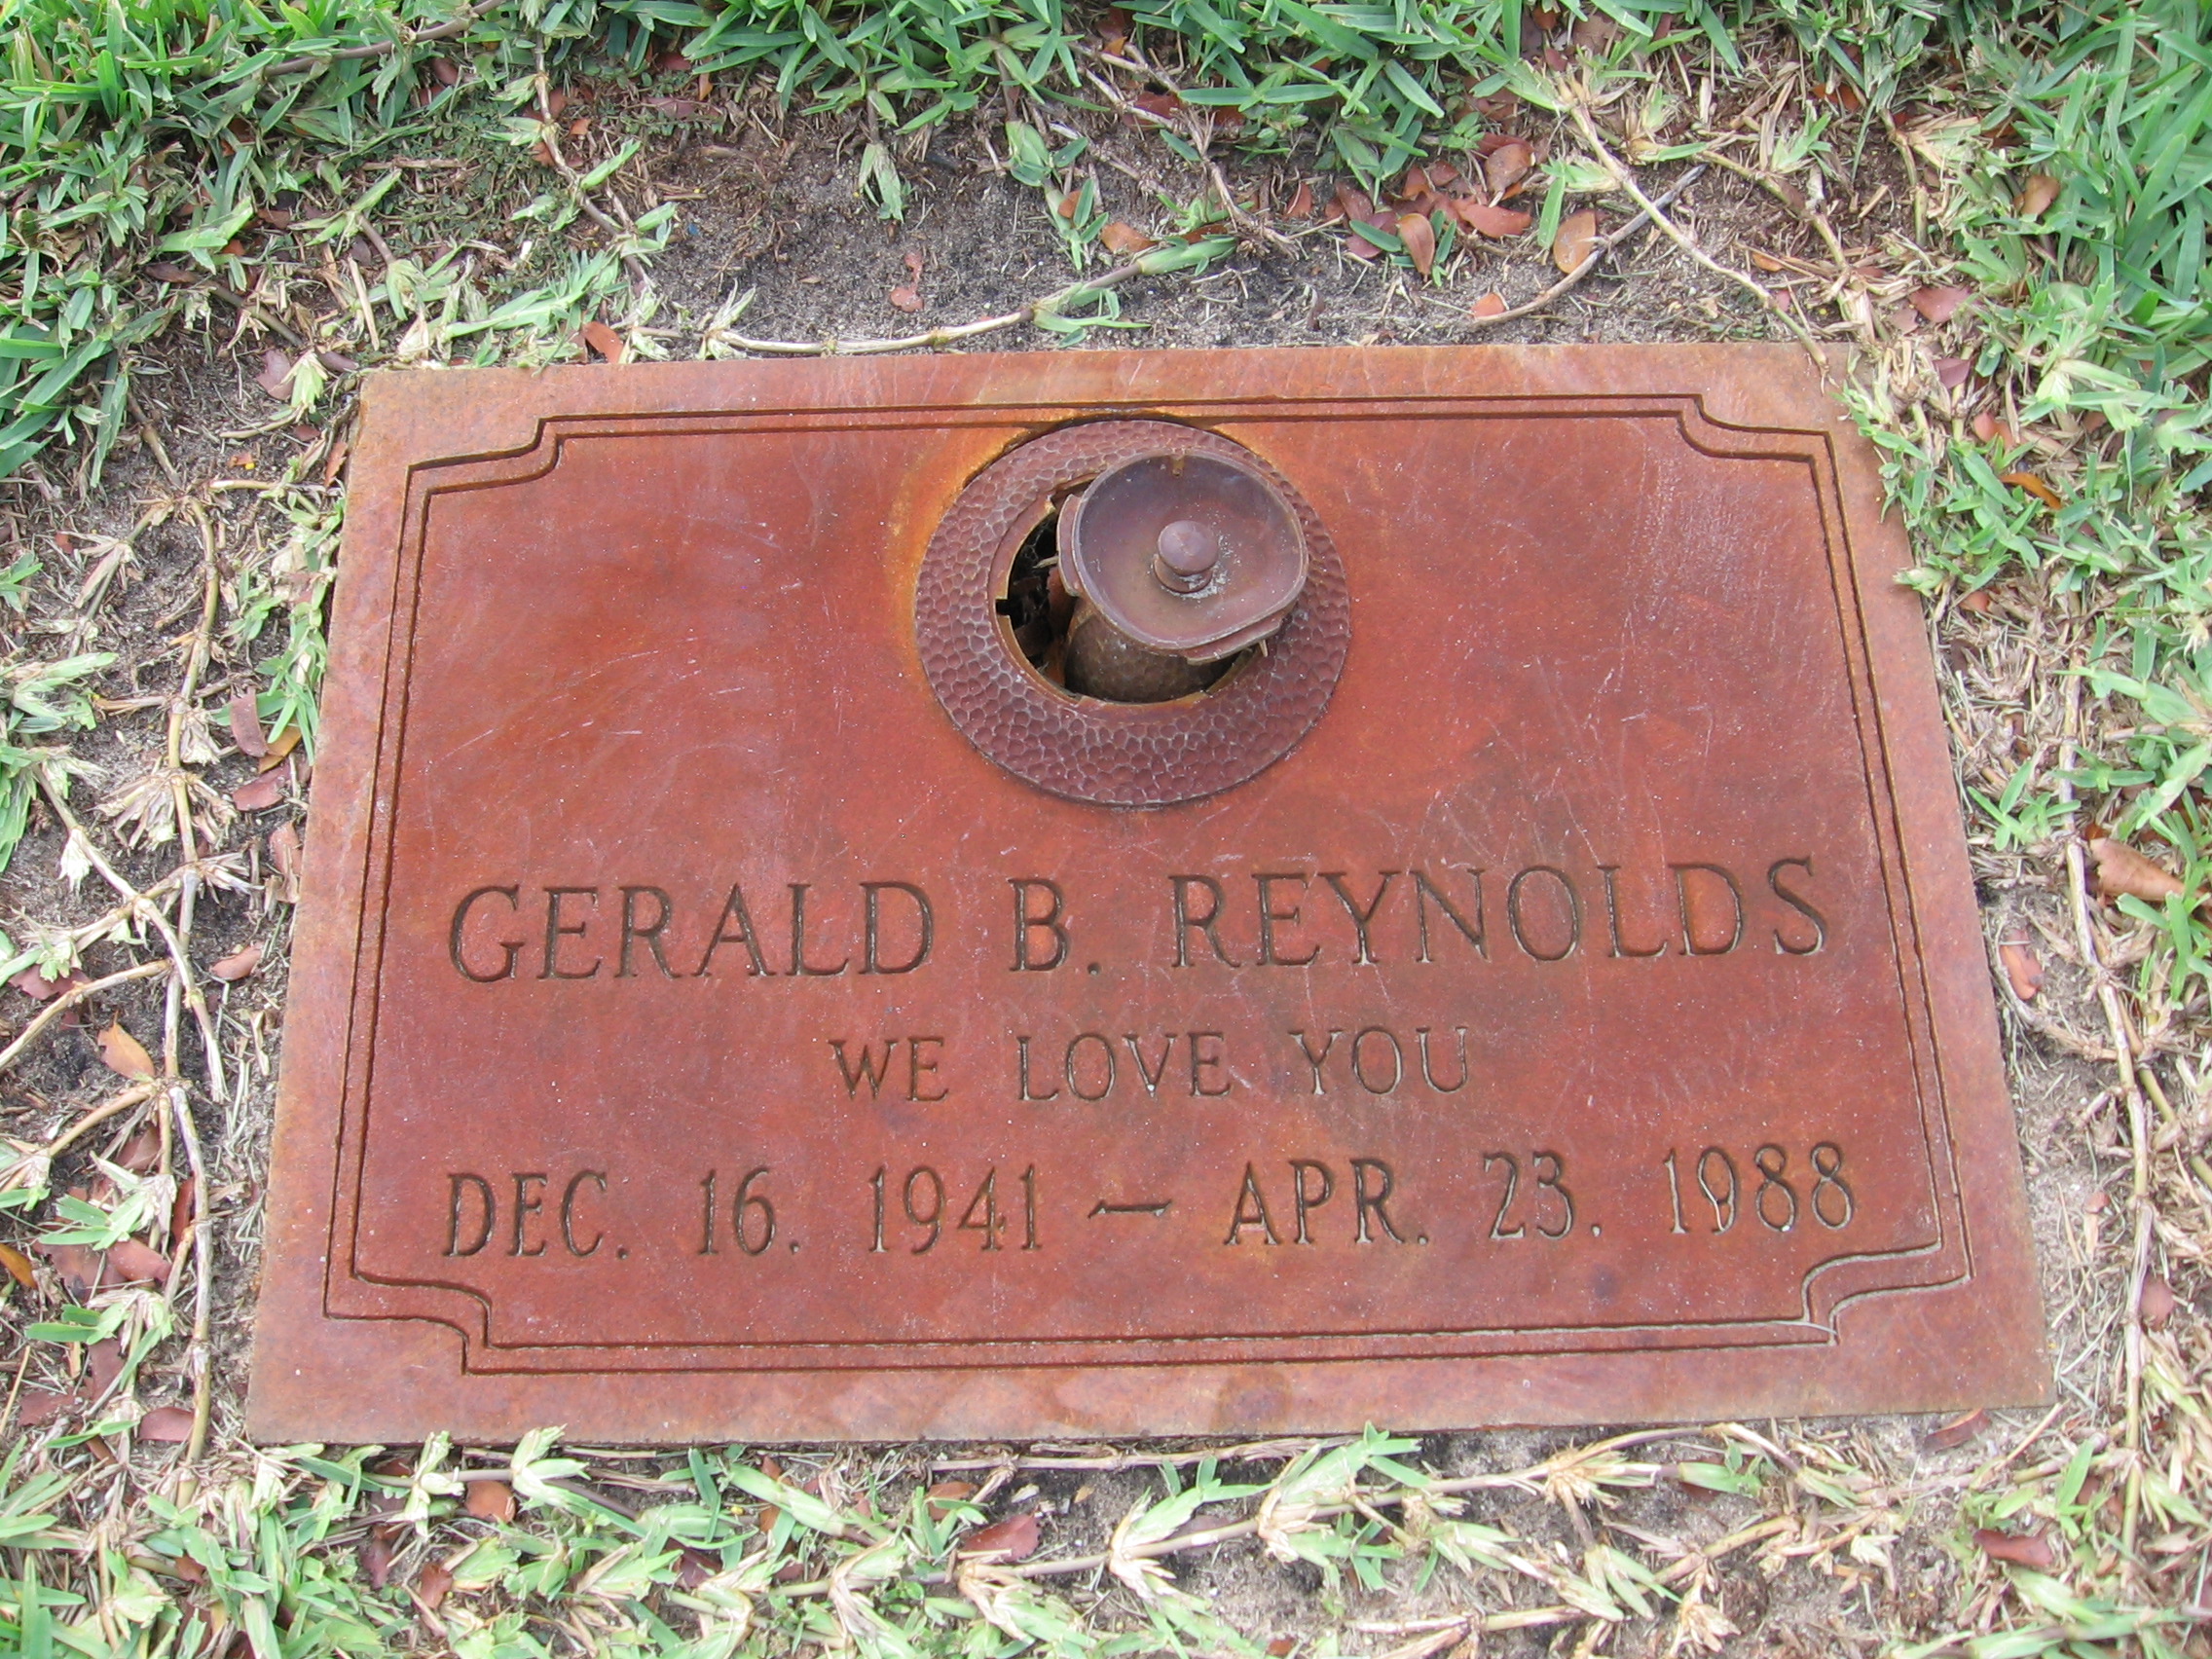 Gerald B Reynolds